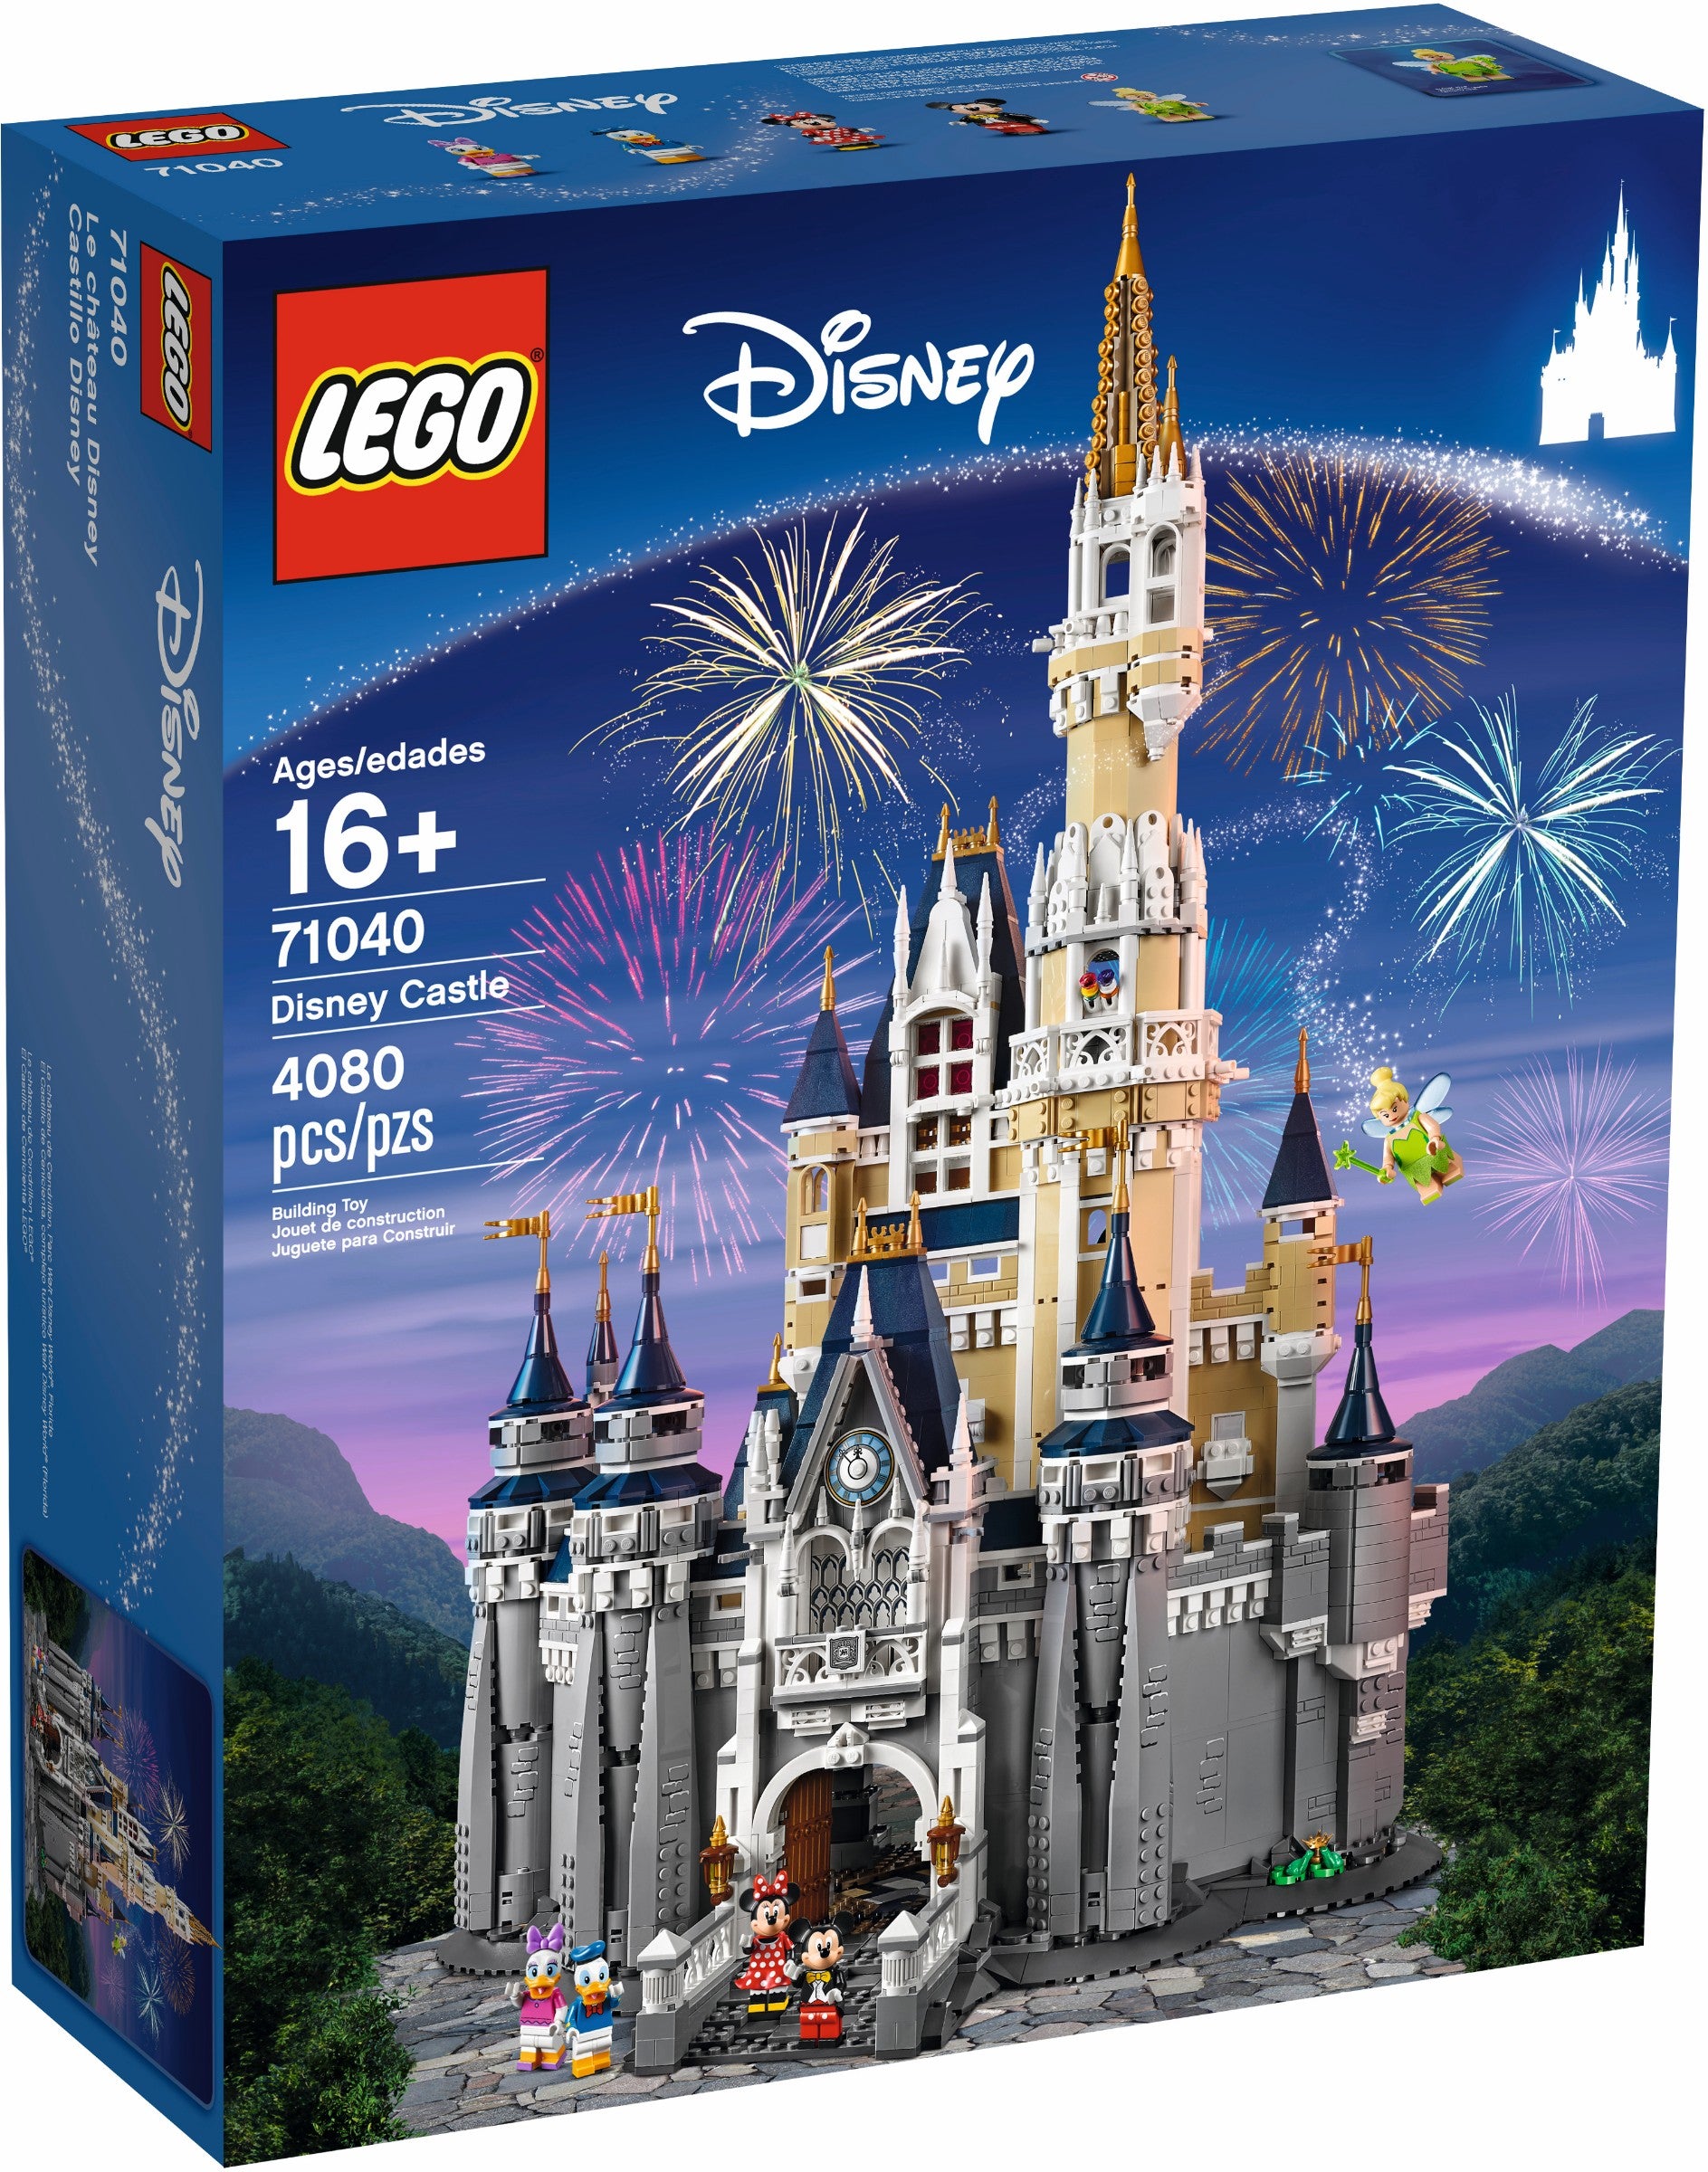 Lego Exclusive 71040 - Disney Castle